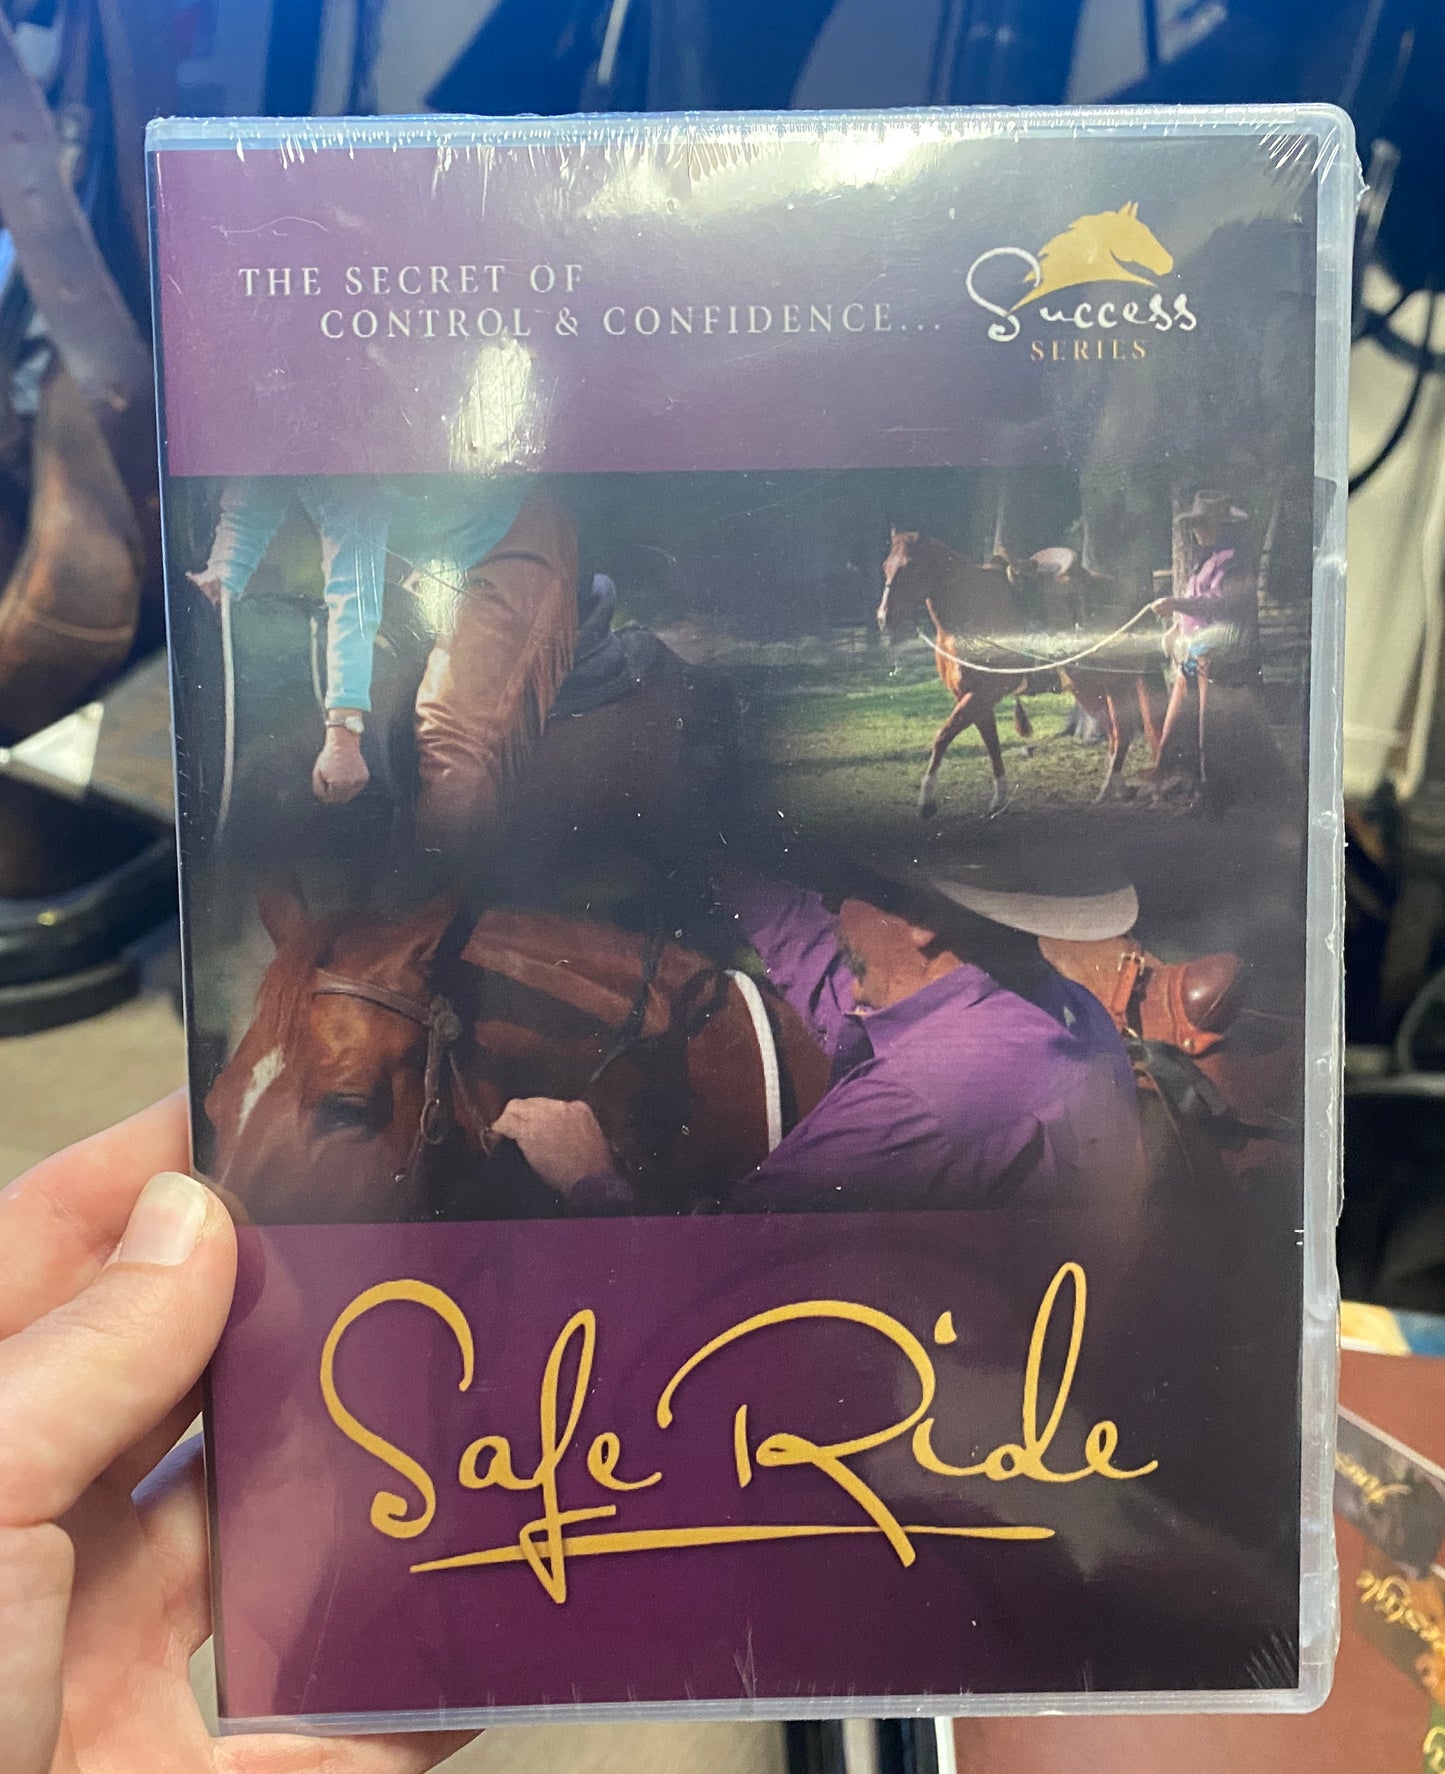 Brand New Parelli Safe Ride DVD